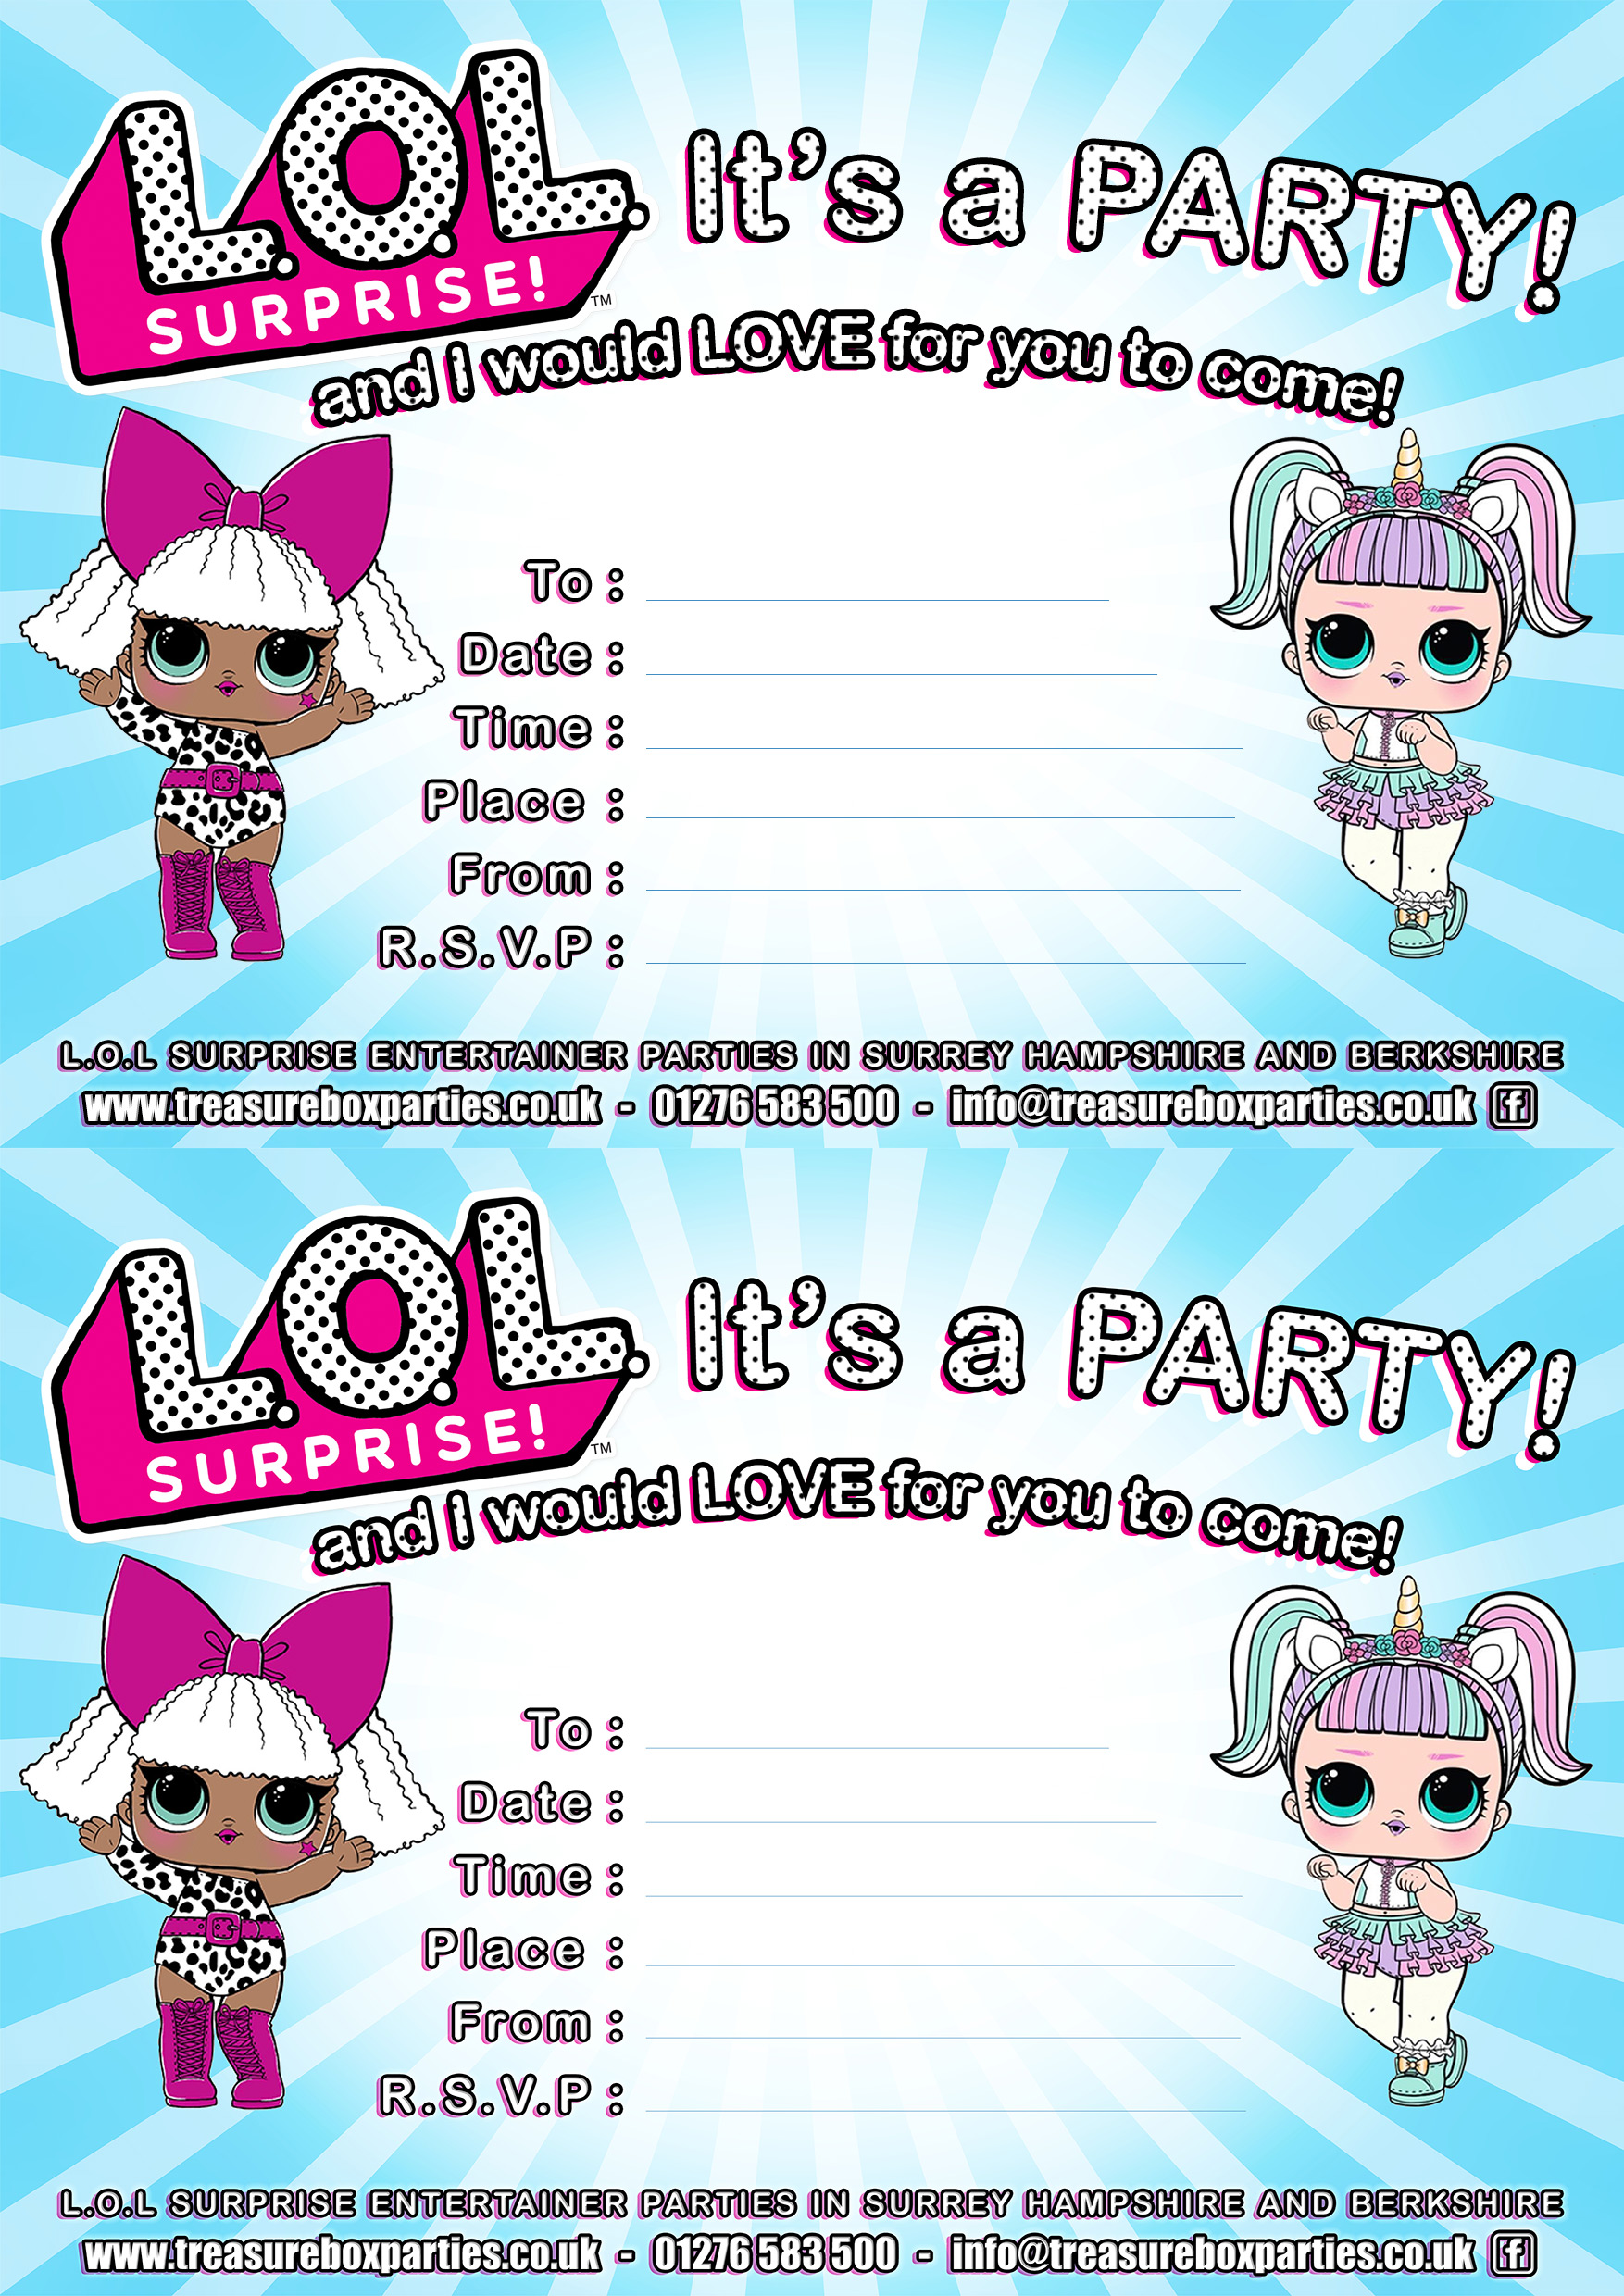 LOL Party Downloads Childrens Entertainer Parties Surrey Berkshire 